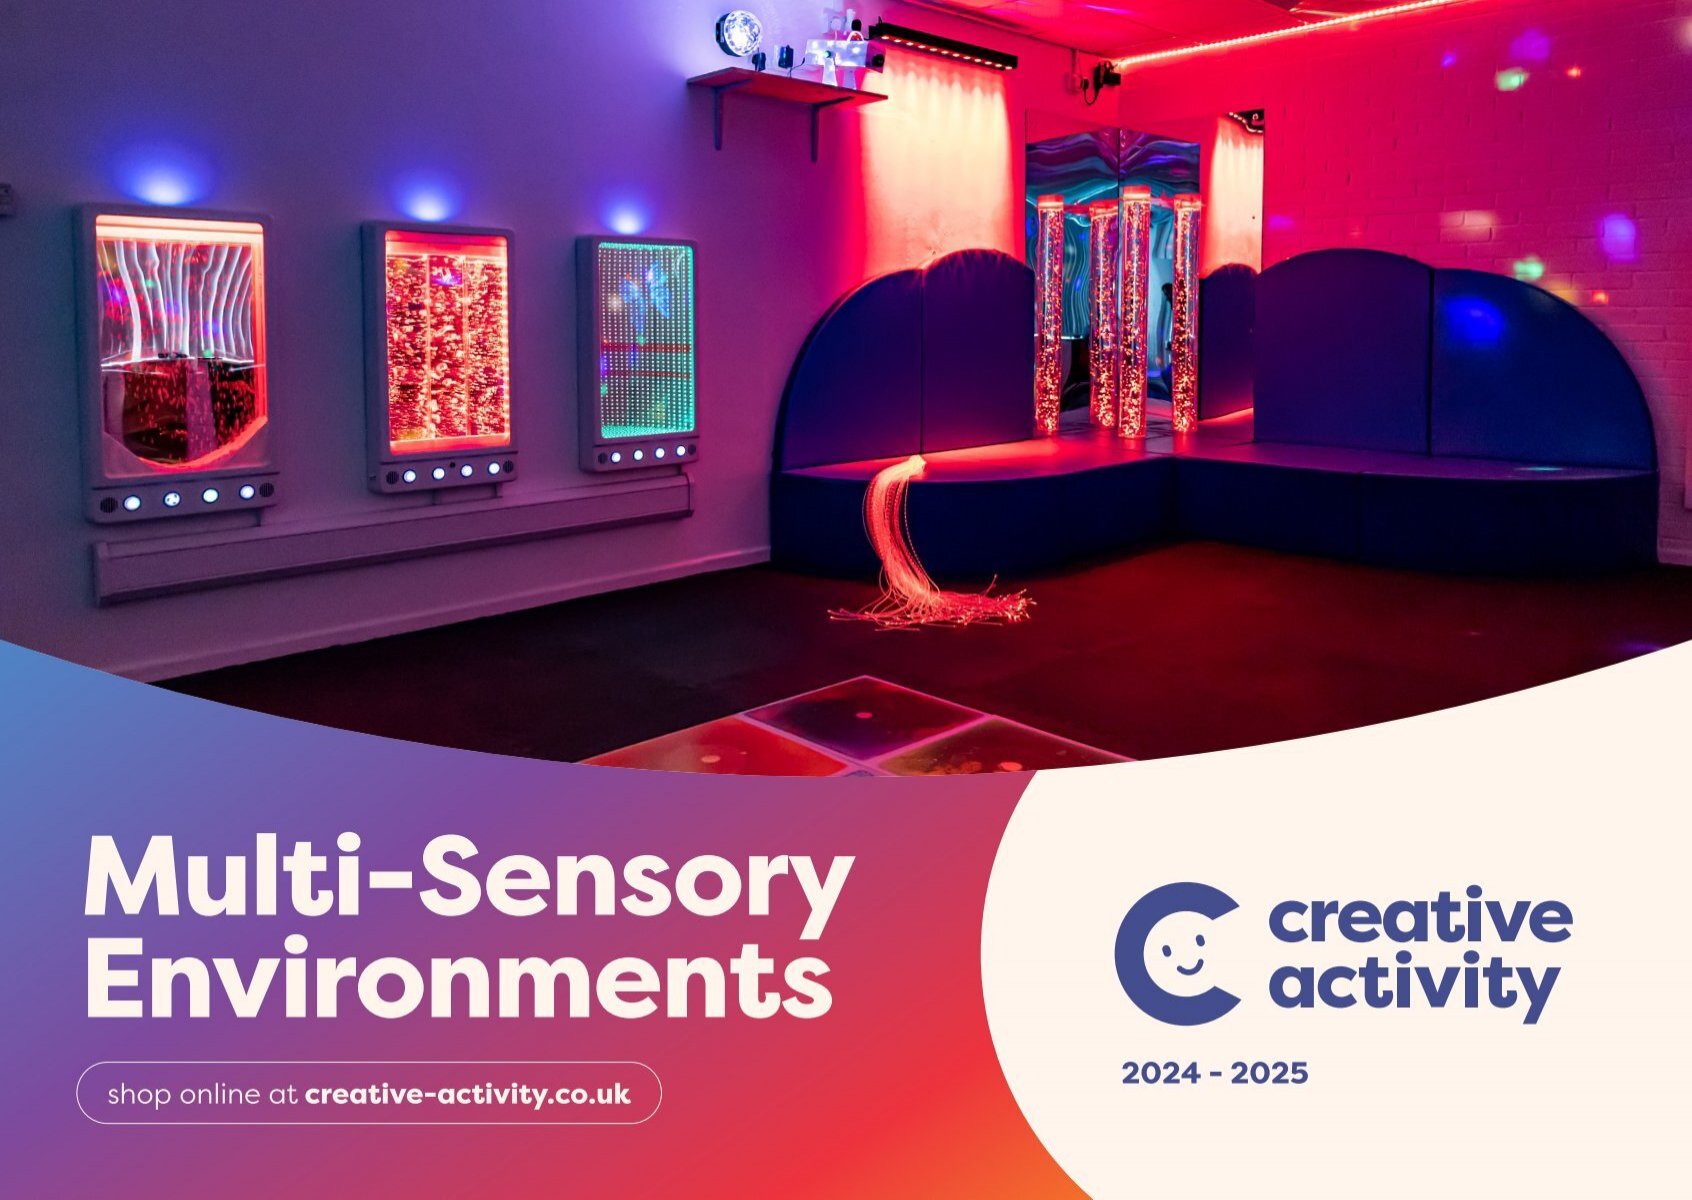 Wall Decor Plus More Sensory Path Floor Decal Vinyl Stickers School Art for  Hallway Movement Maze 9 Activities Primary Colors